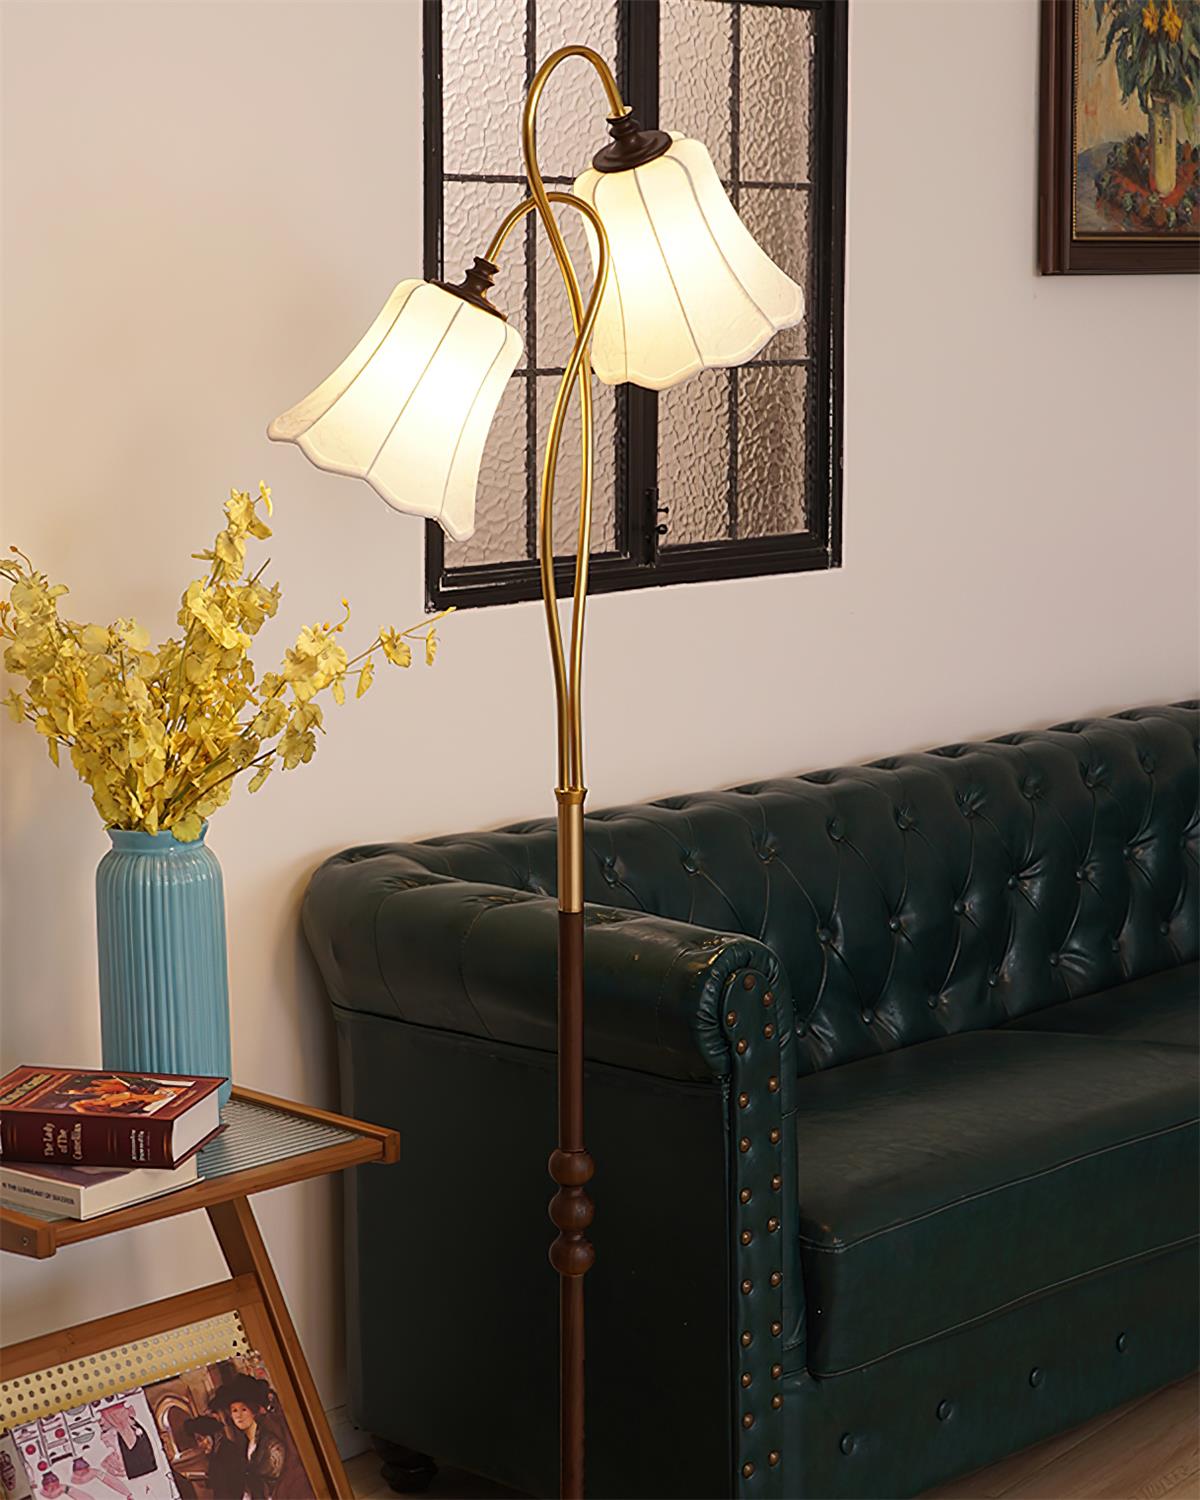 Magnolya Floor Lamp